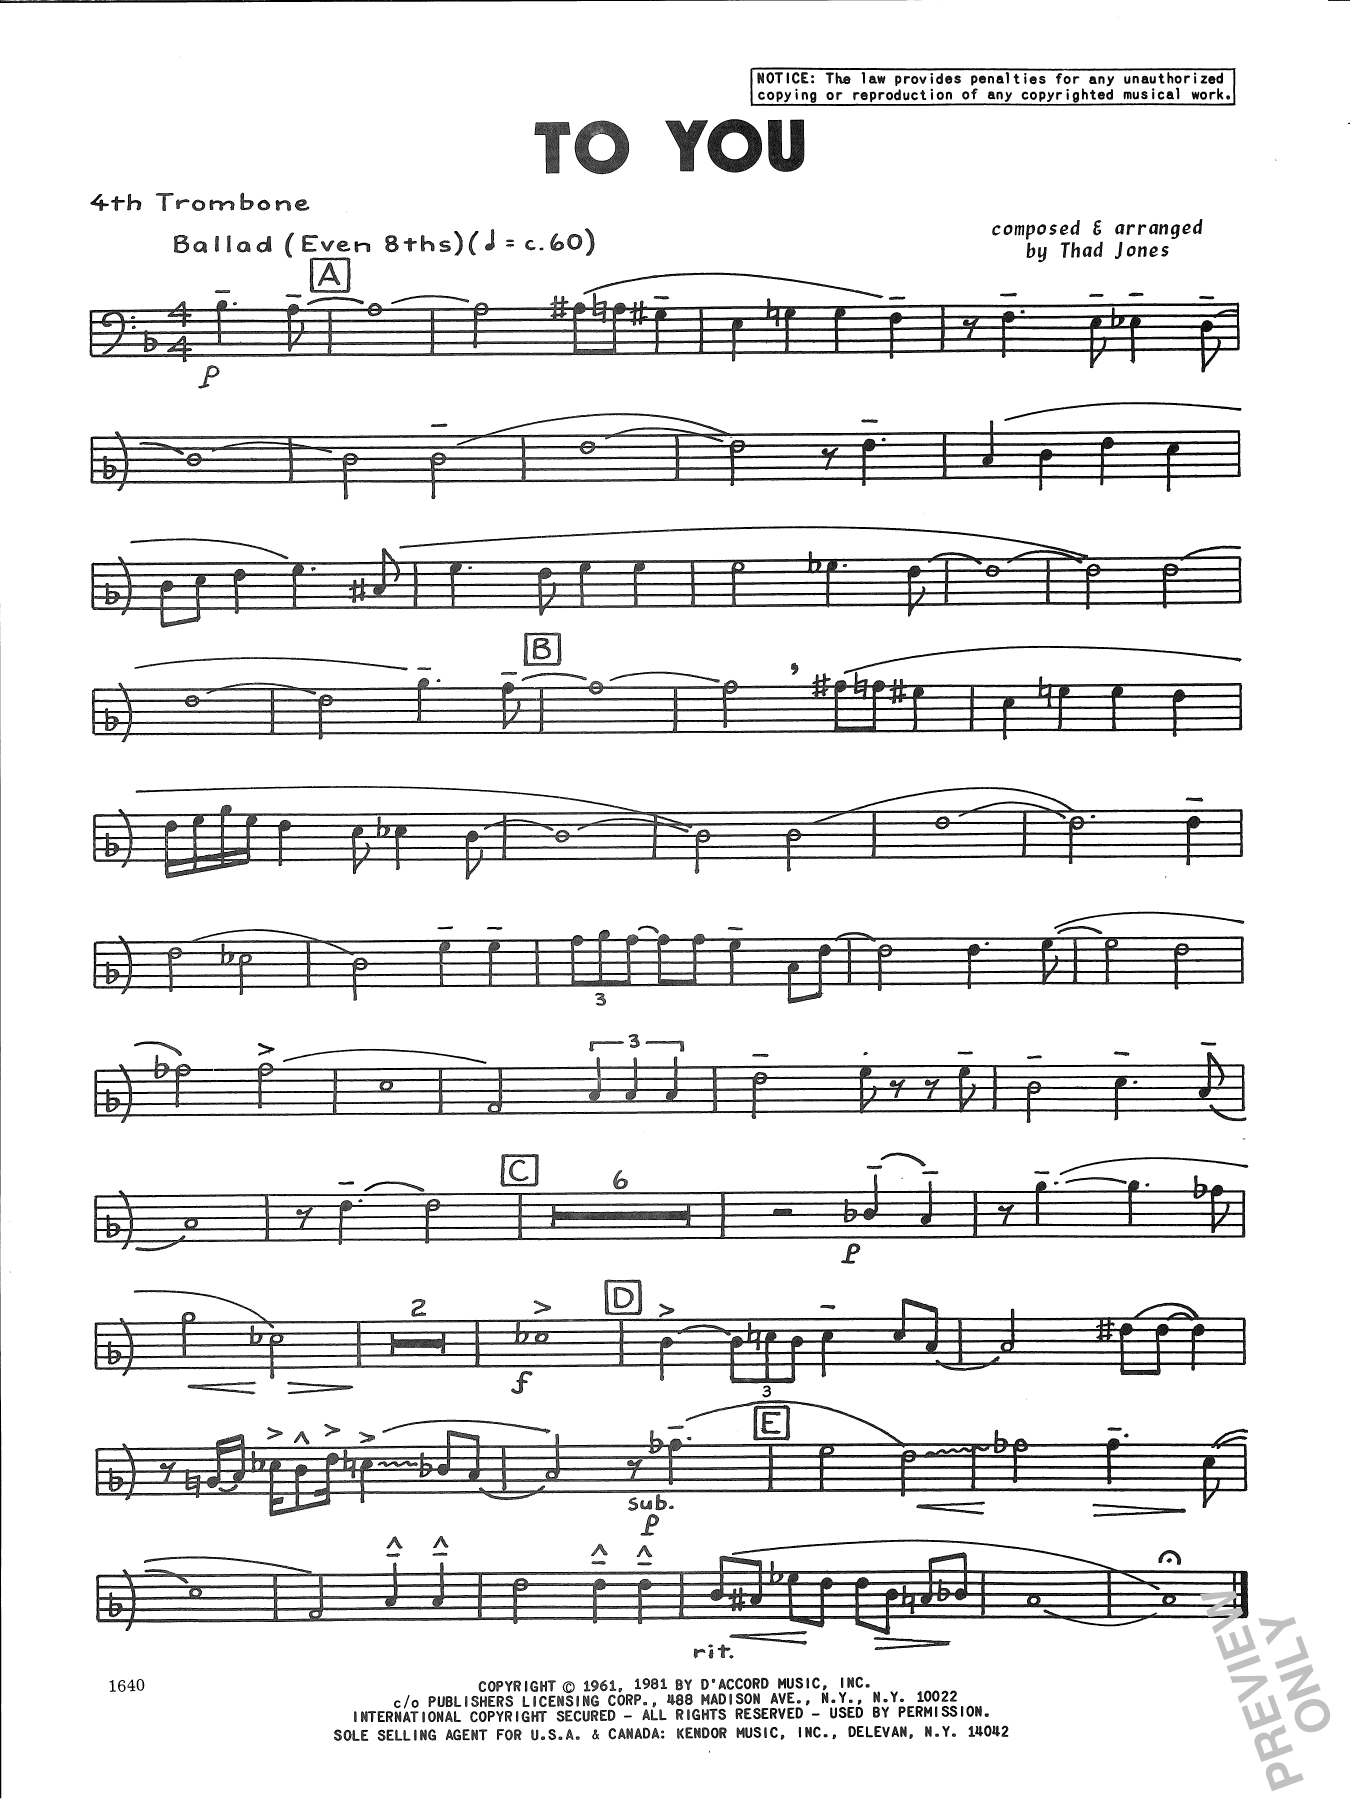 Download Thad Jones To You - 4th Trombone Sheet Music